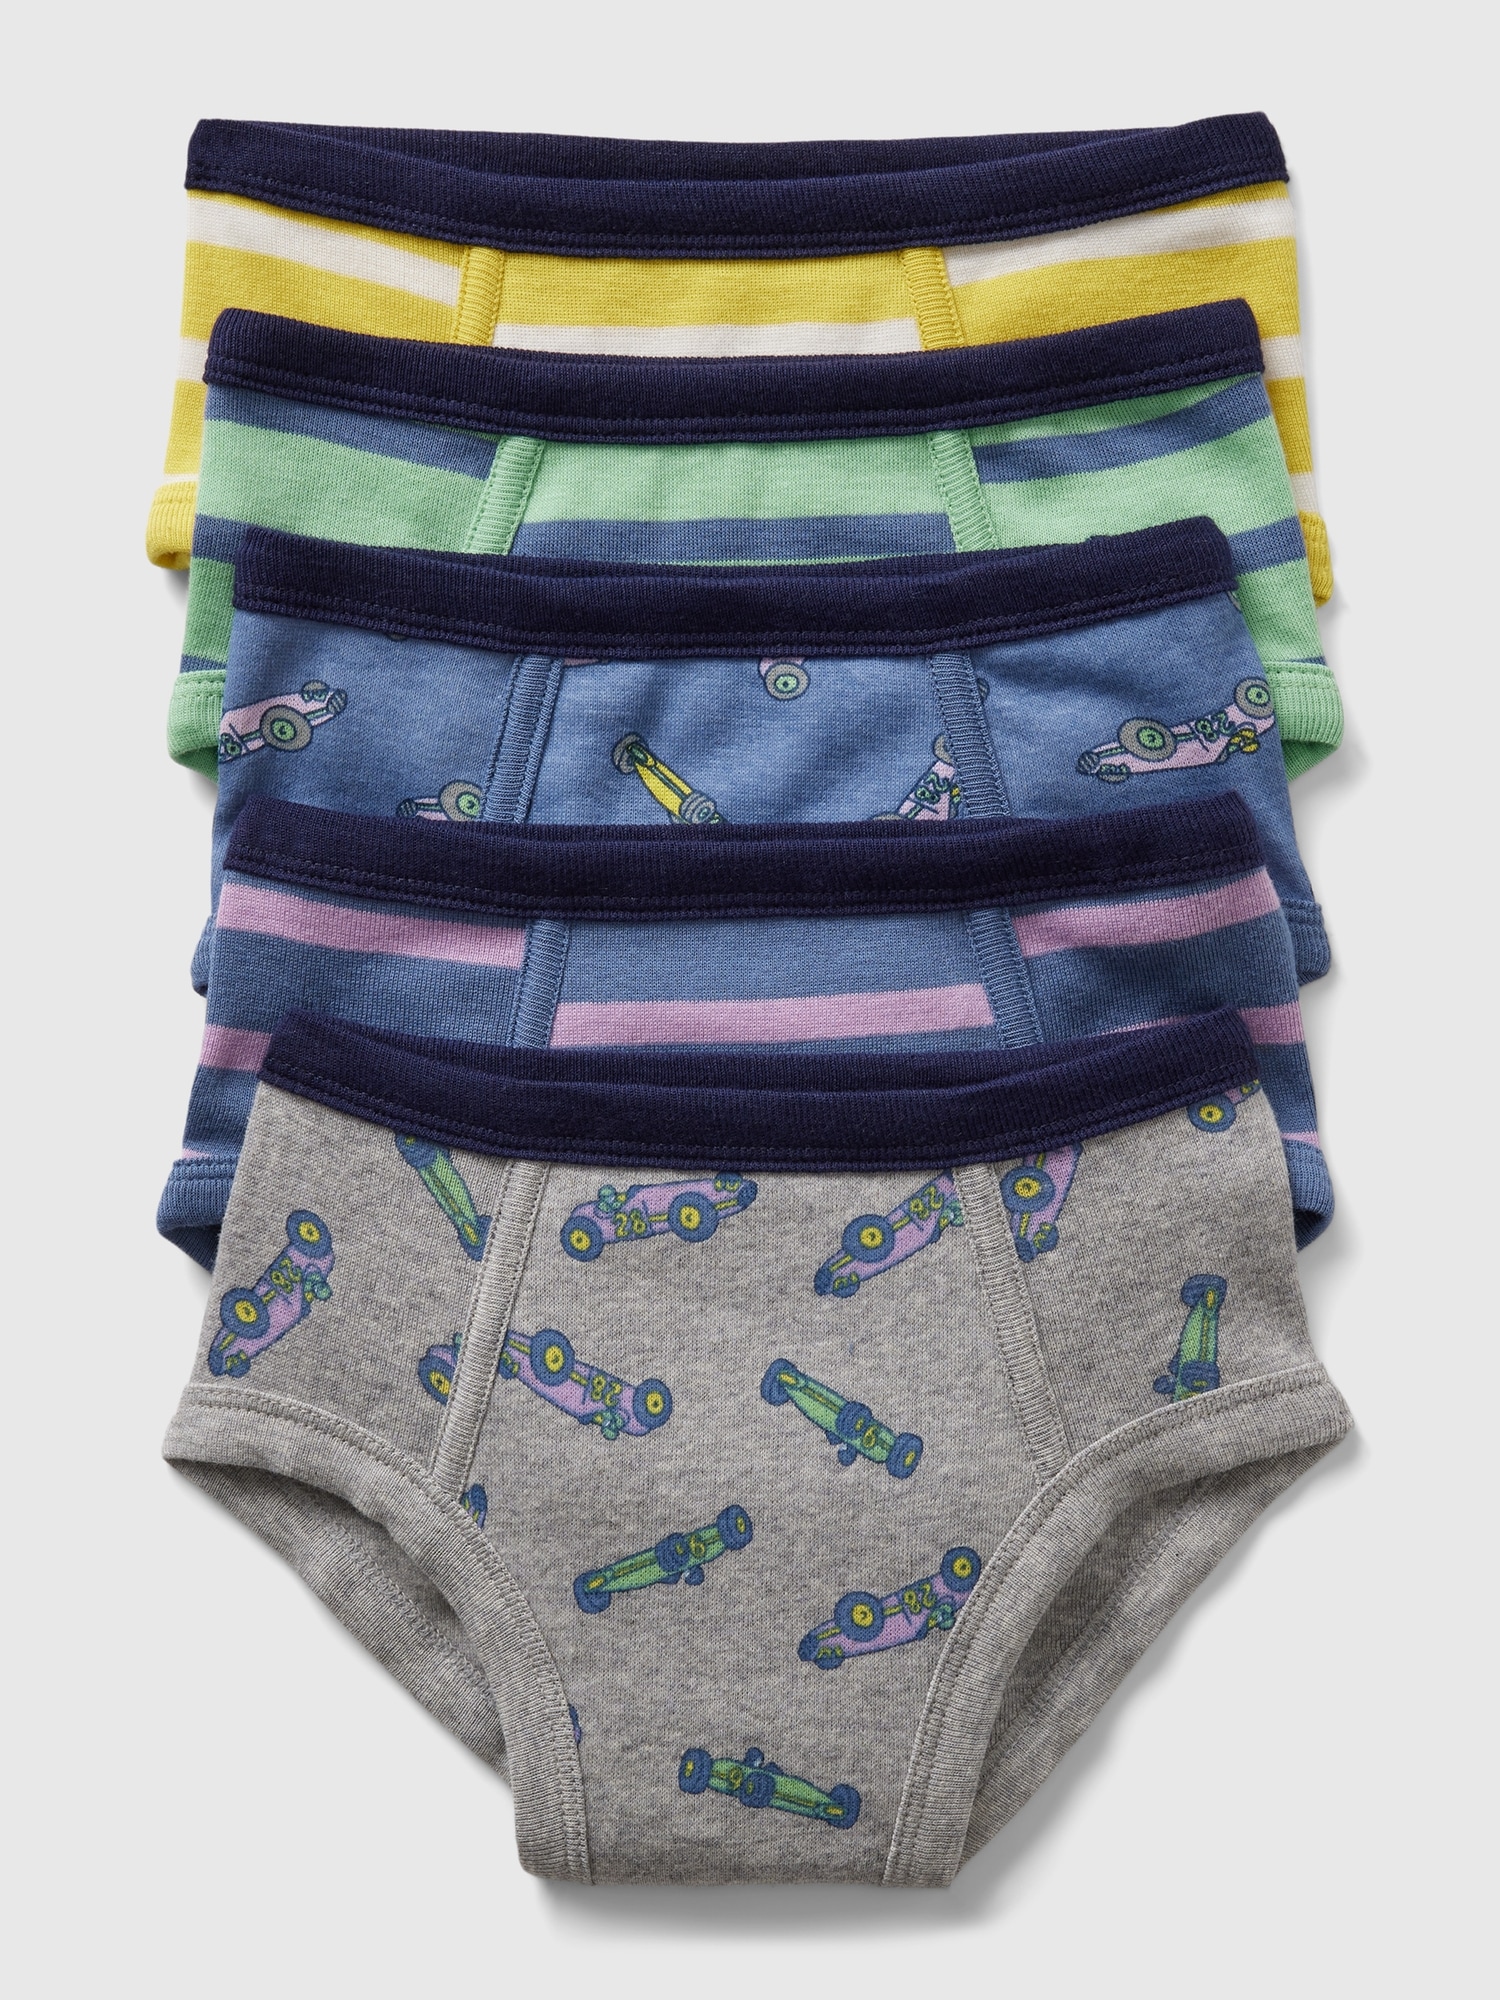 Children Comfortable Underpants Organic Cotton Soft Seamless